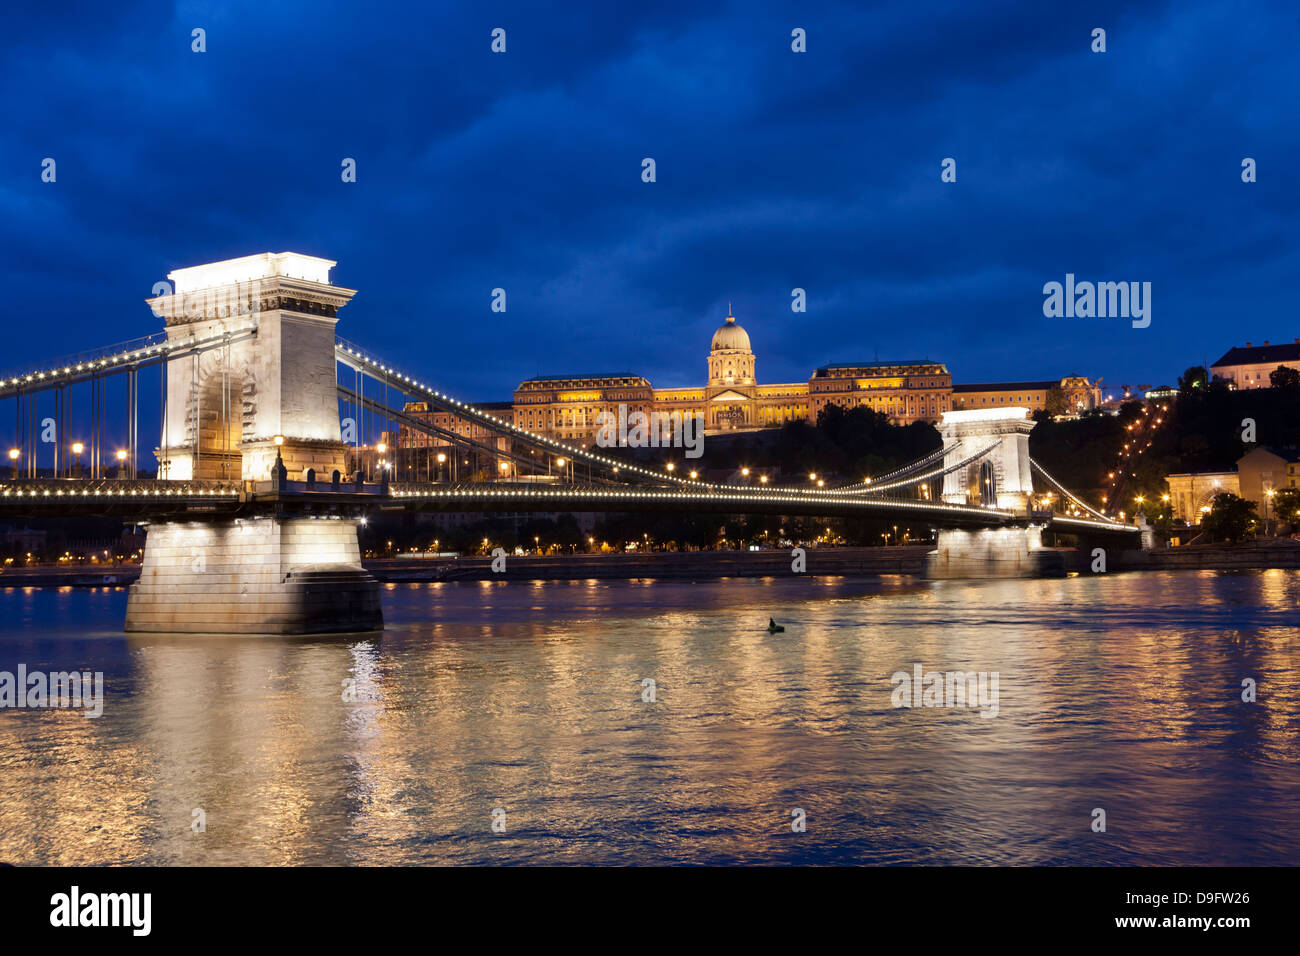 The Chain Bridge across the River Danube at night, Budapest, Hungary Stock Photo